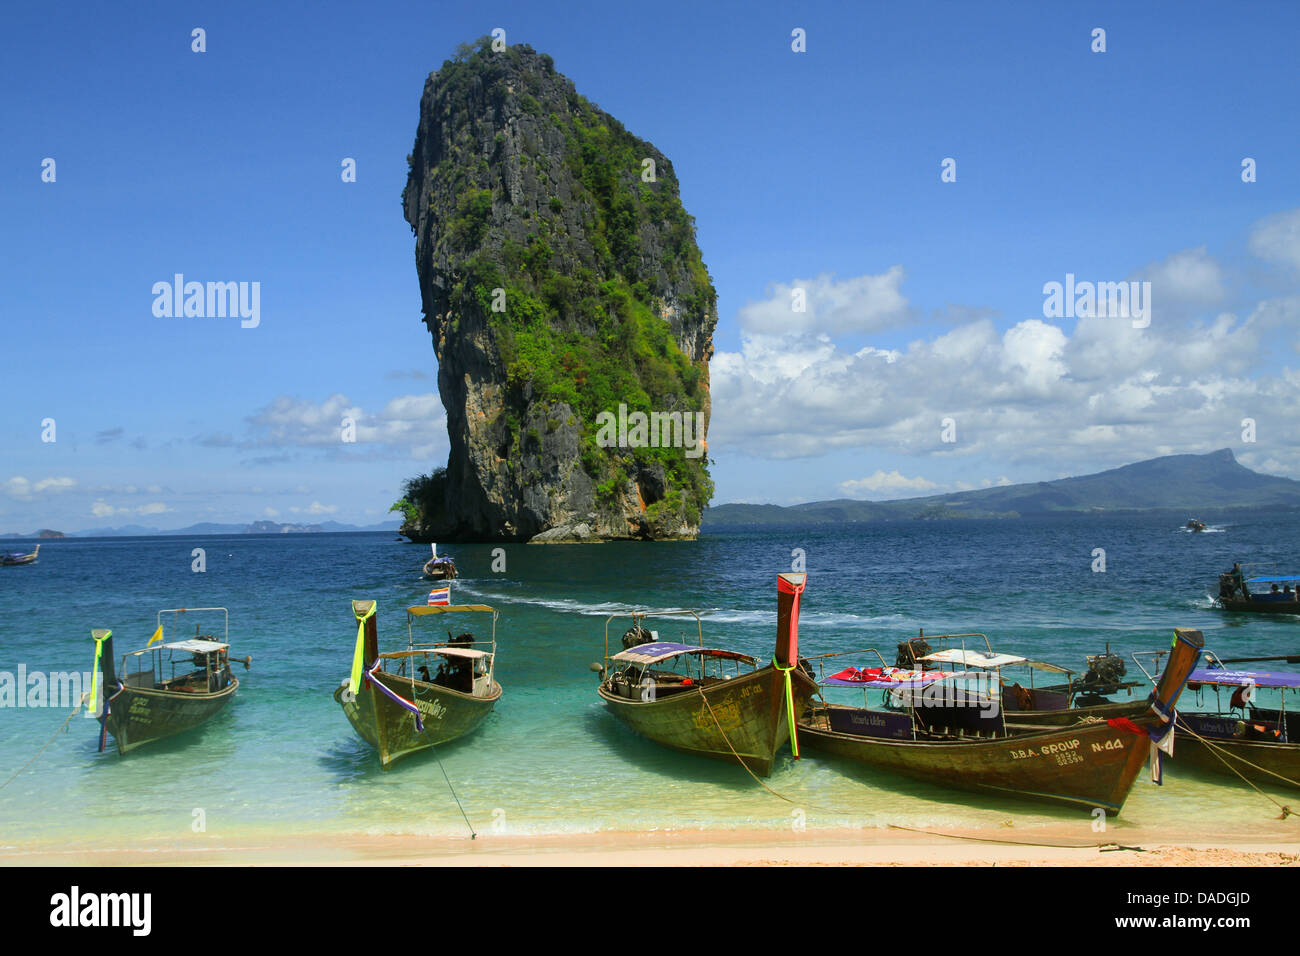 long-tail boats at the beach in front of grandiose karst rock formation, Thailand, Krabi, Laem Phra Nang Stock Photo